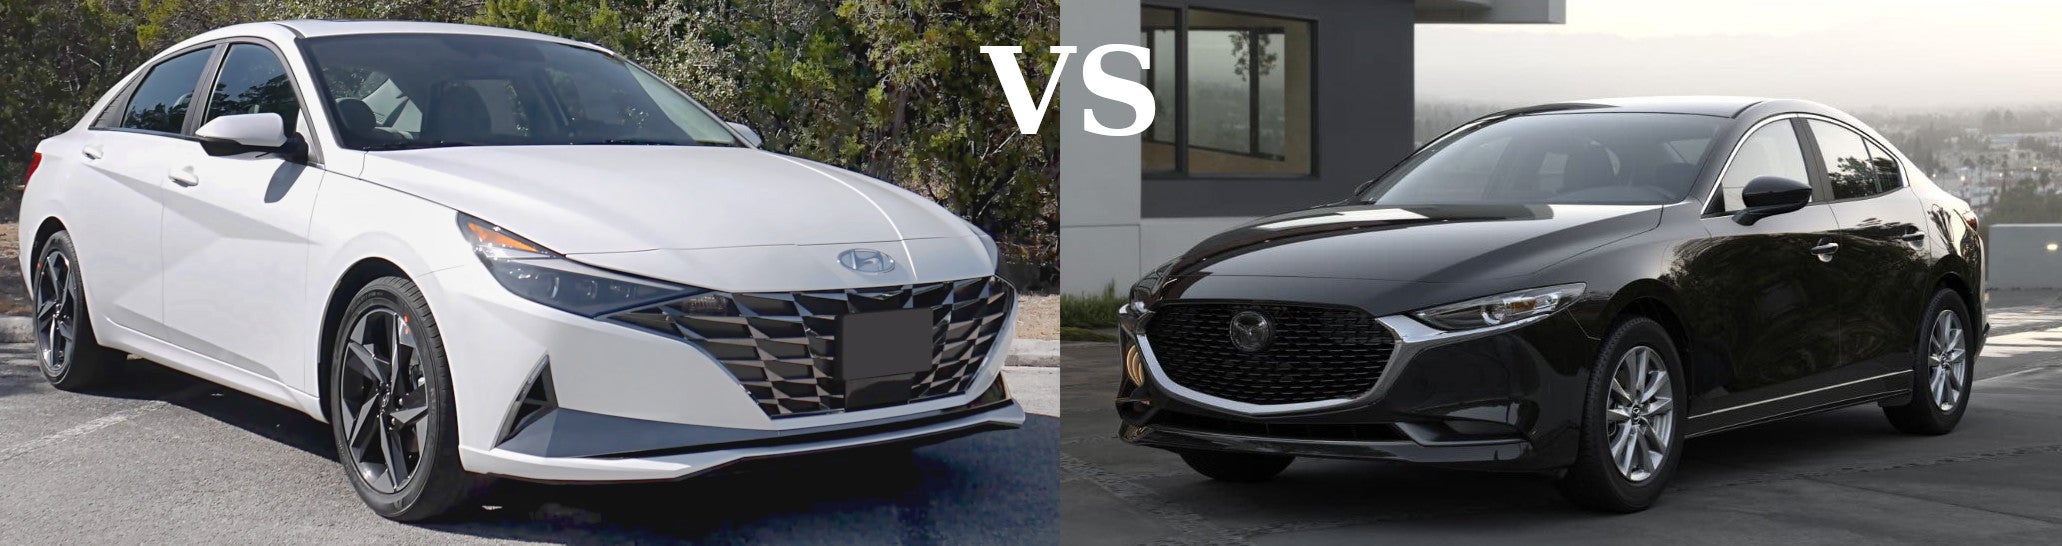 The Mazda Mazda3 compared to the Hyundai Elantra